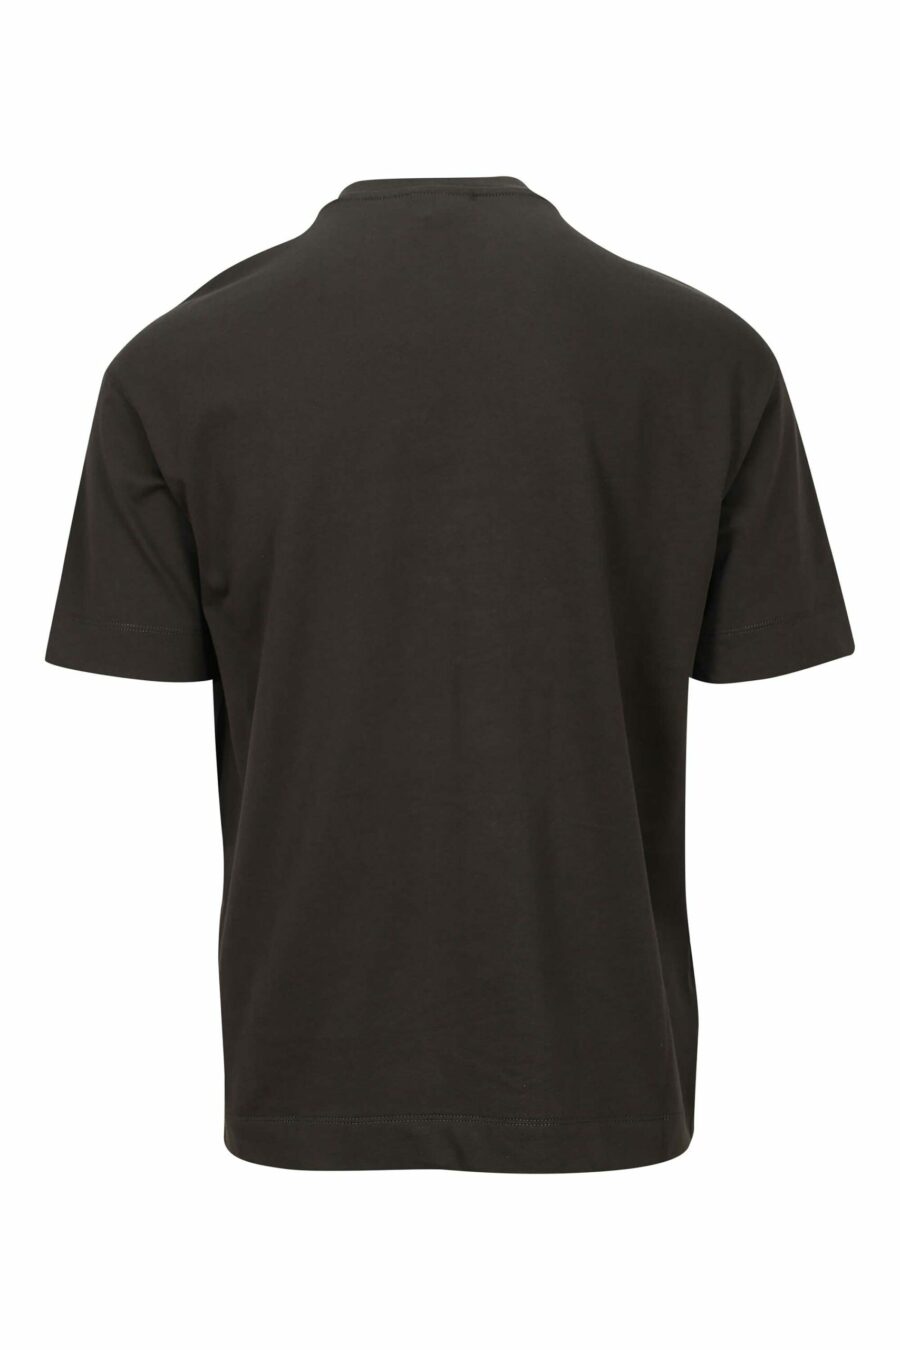 Militärgrünes T-Shirt mit monochromem Adler-Maxilogo - 8057970433323 1 skaliert